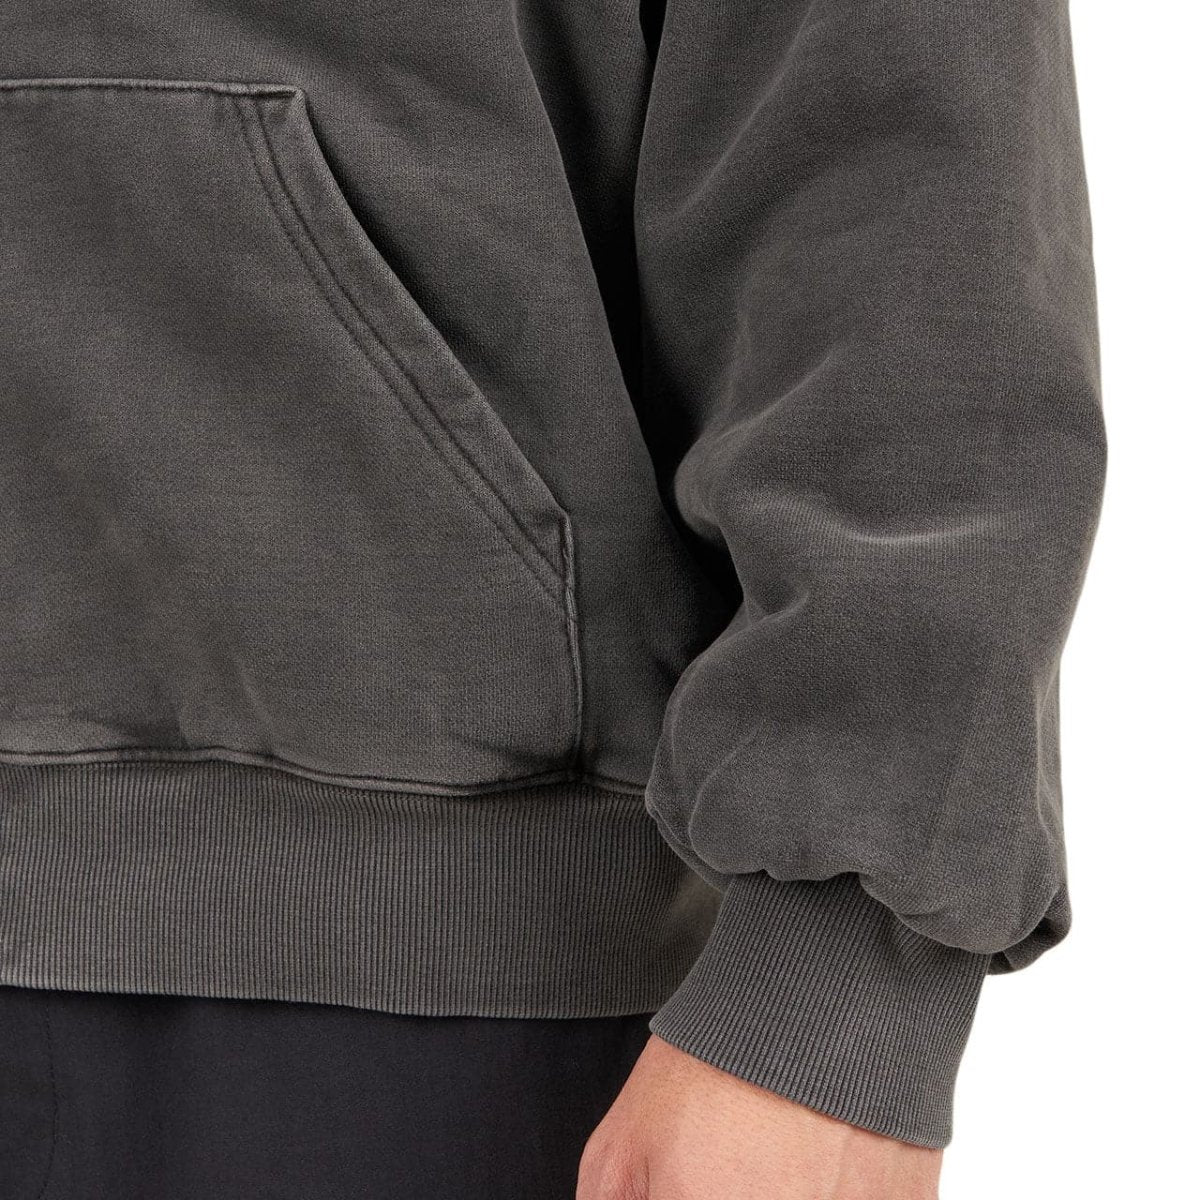 Carhartt WIP Hooded Vista Jacket (Grau)  - Allike Store